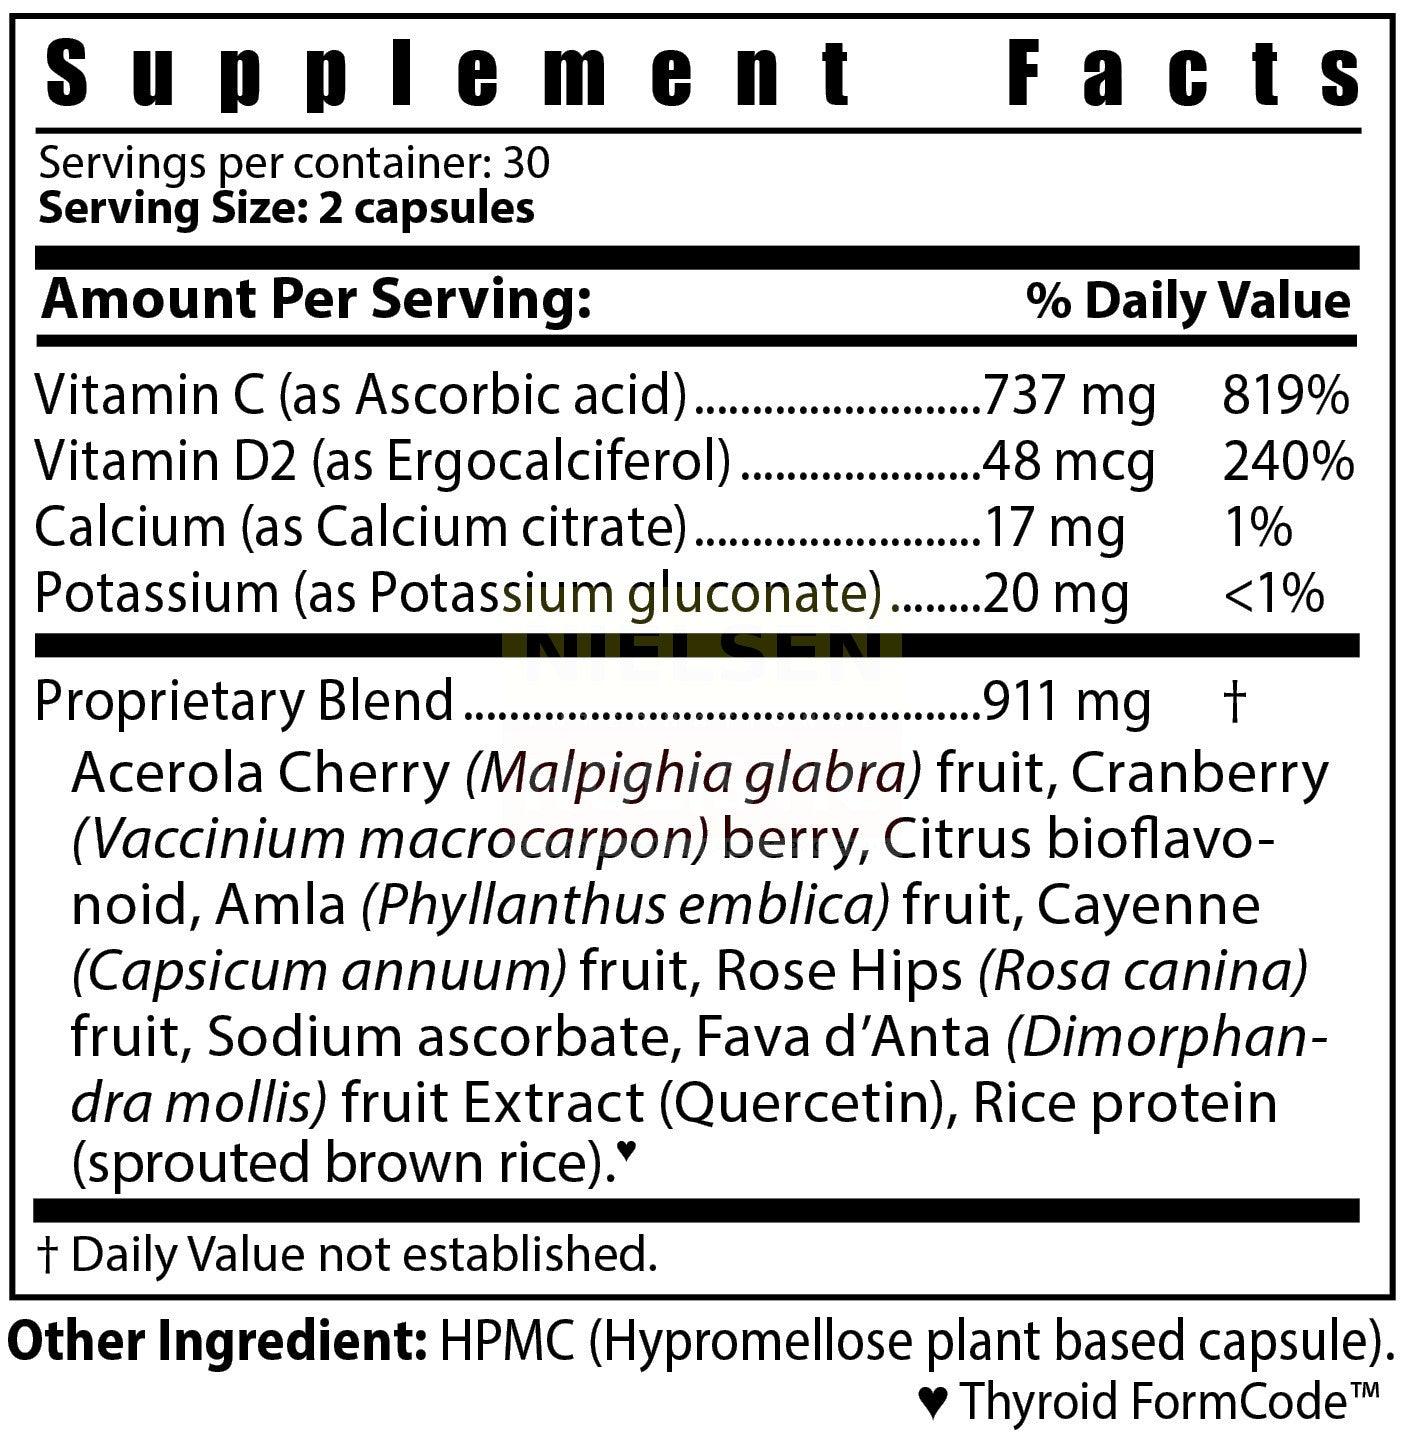 Inno-Vita C-Comp™ -- 60 veggie capsules - Healthy Cofactors